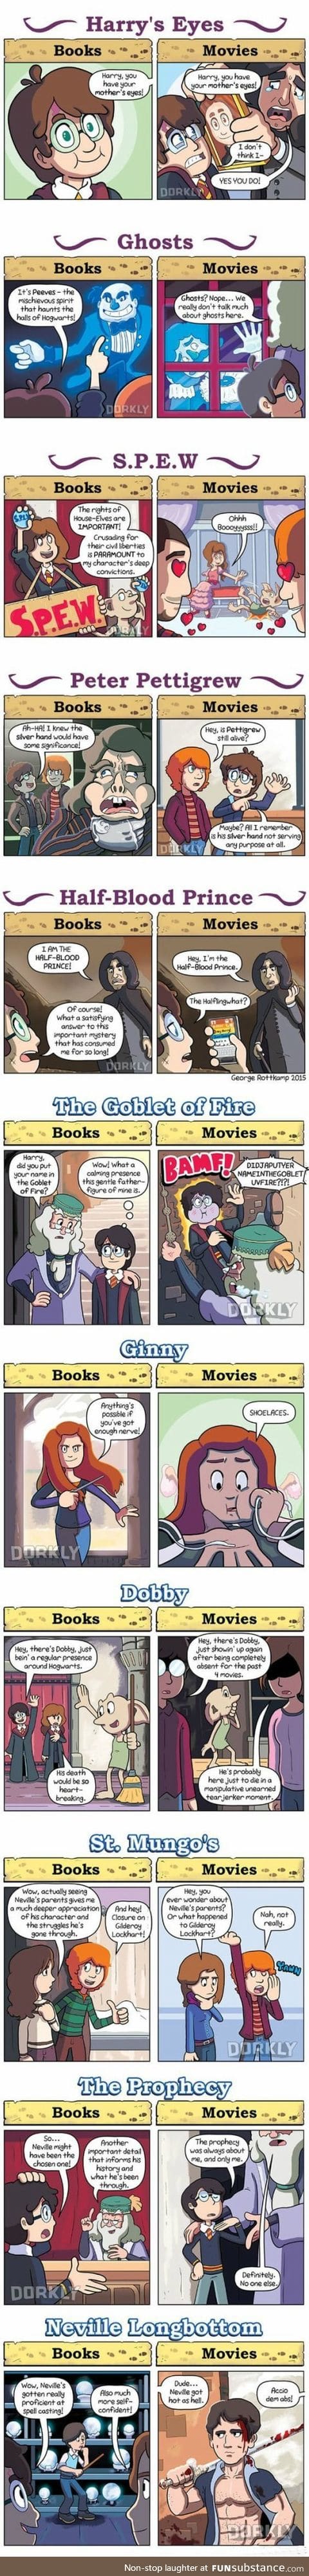 Harry Potter Movies VS Harry Potter Books